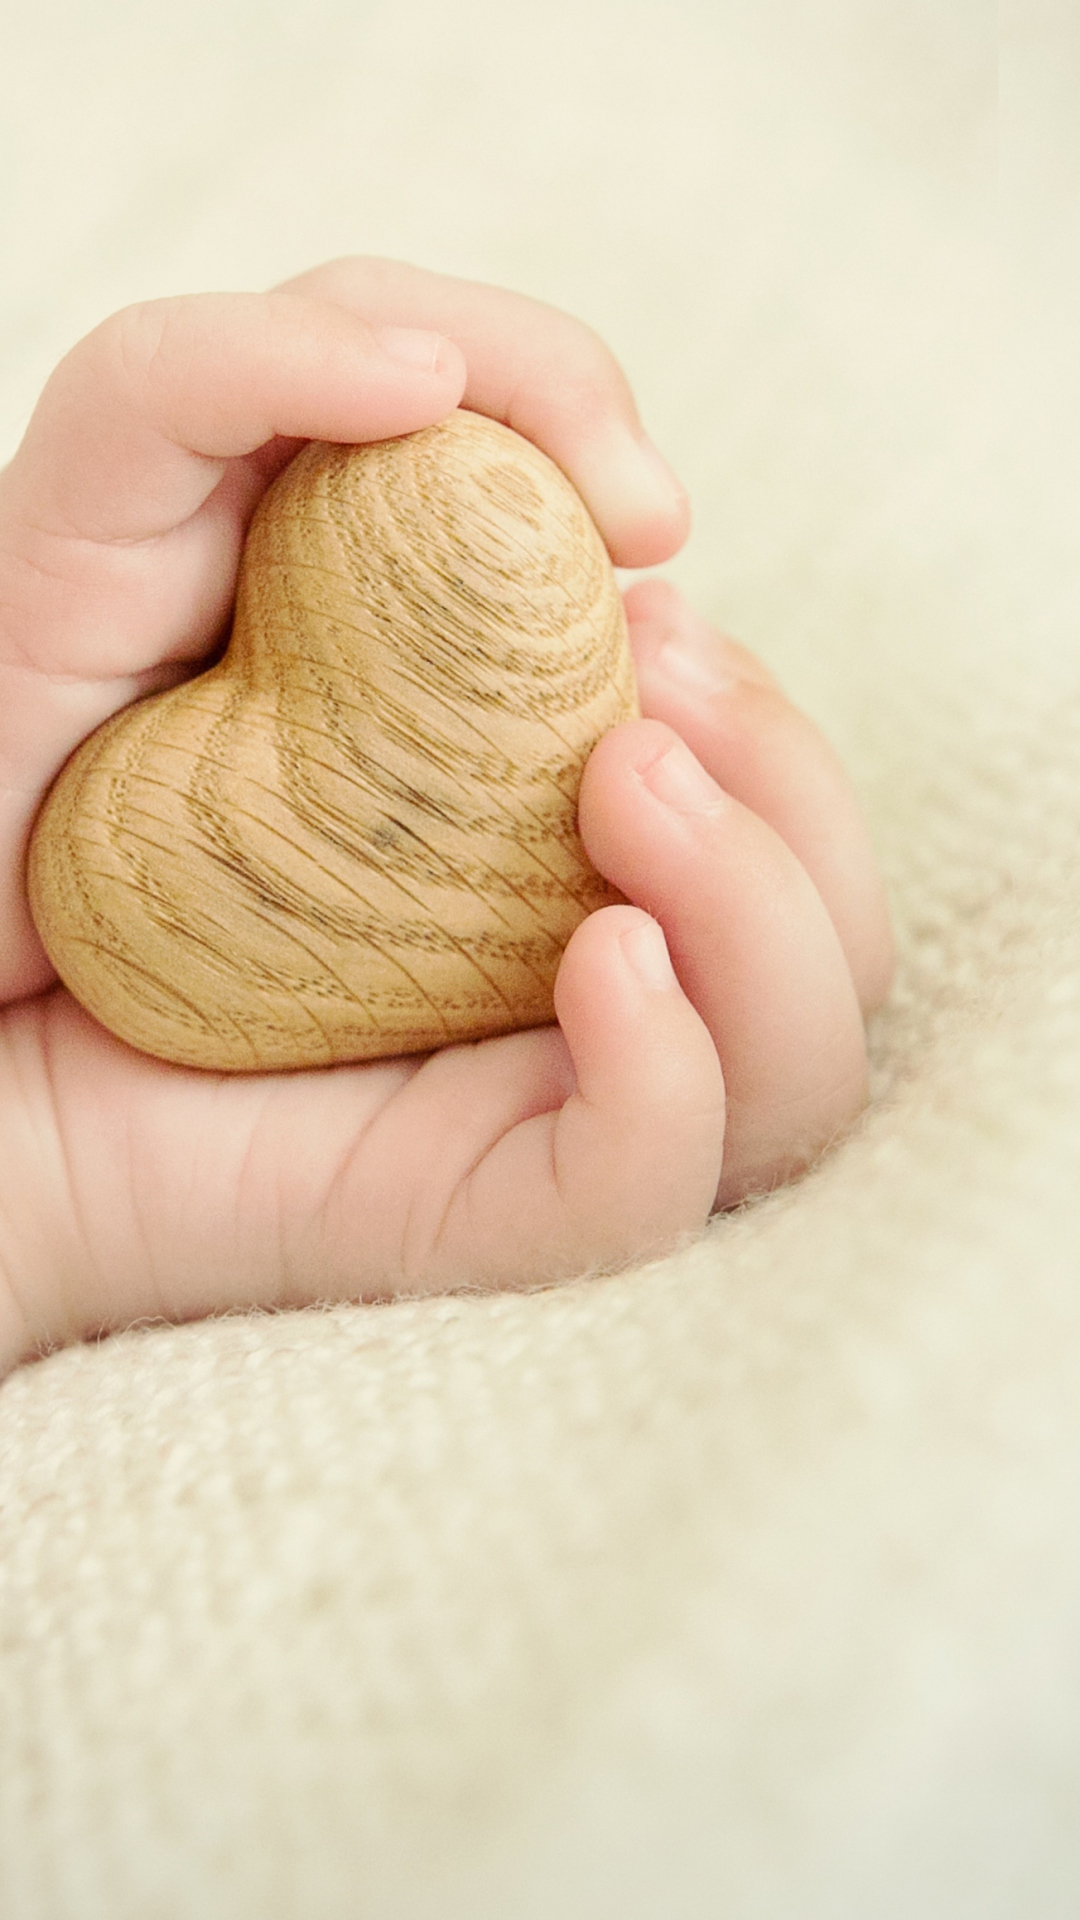 Das Little Wooden Heart In Child's Hands Wallpaper 1080x1920